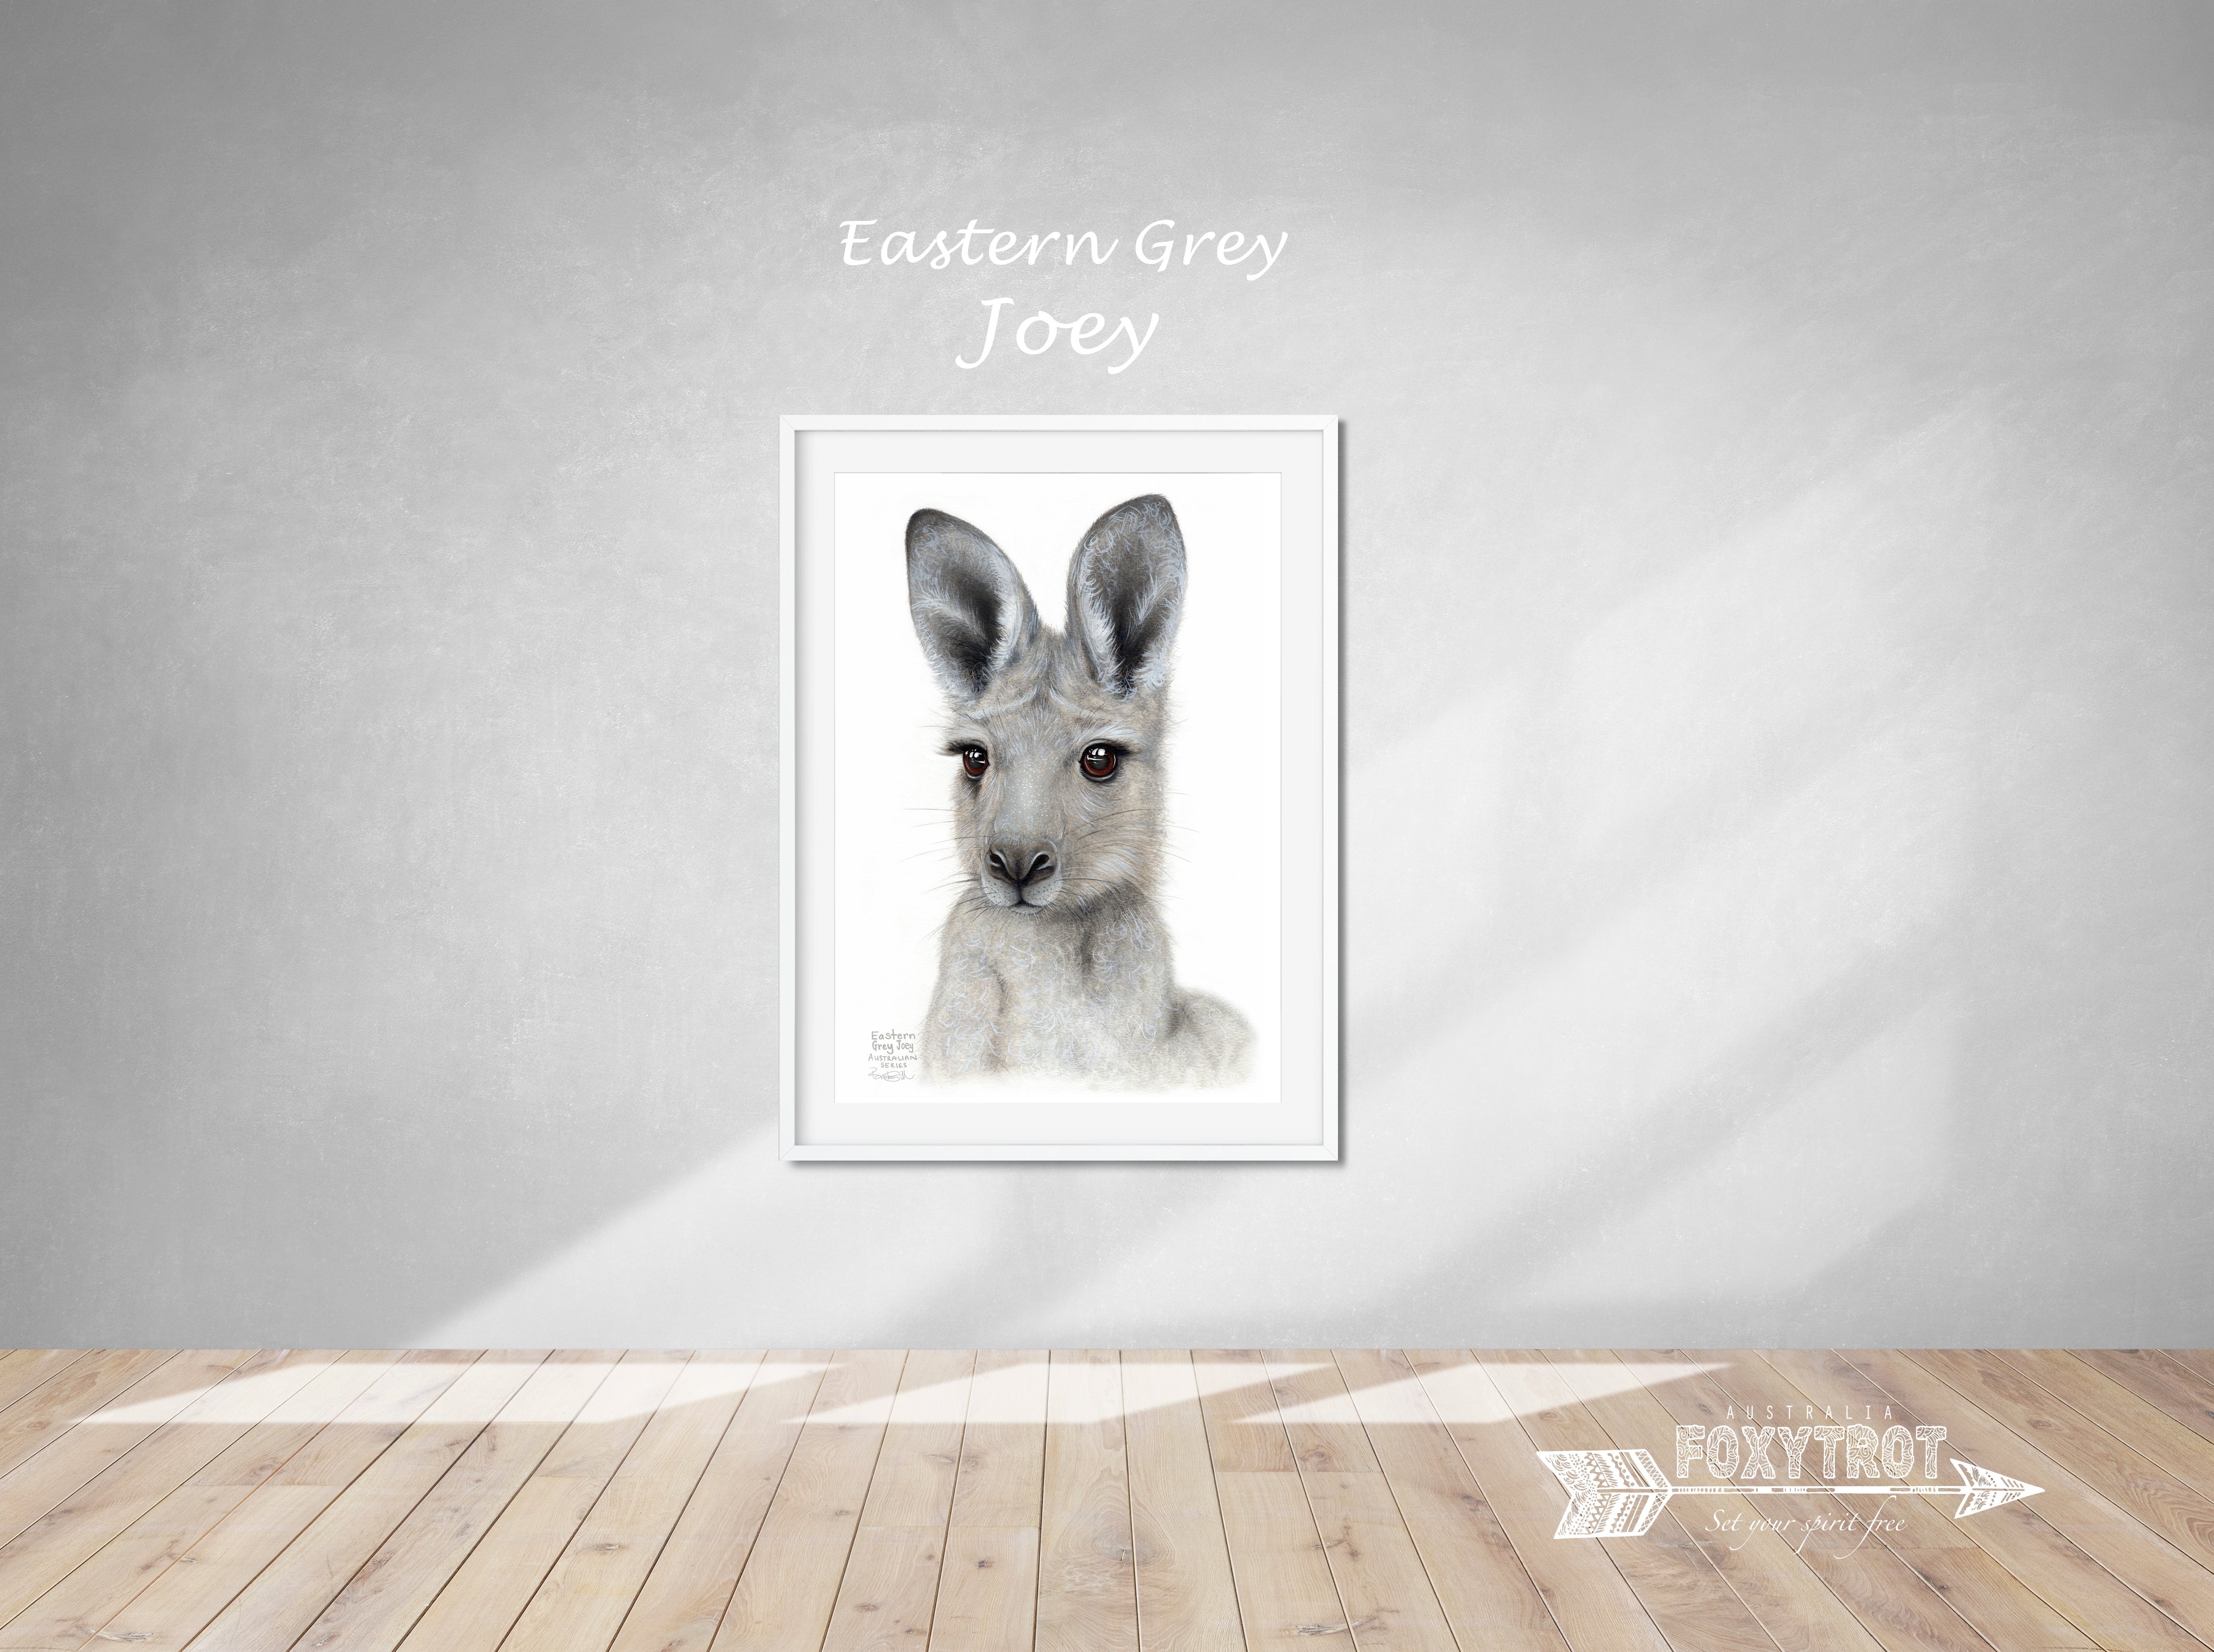 Eastern Grey Joey